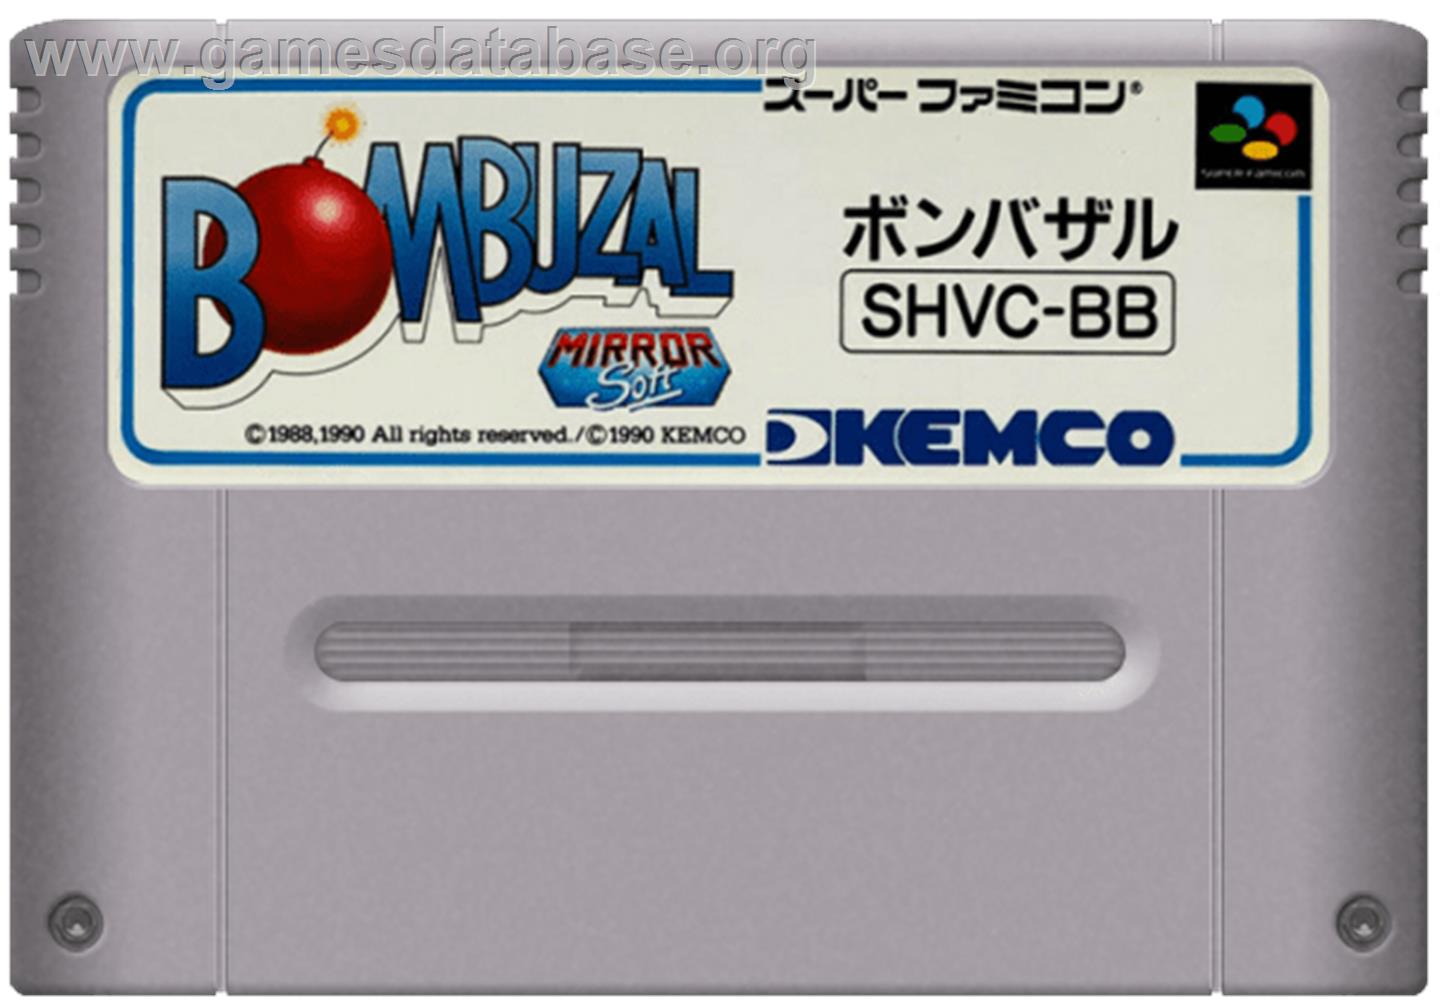 Bombuzal - Nintendo SNES - Artwork - Cartridge